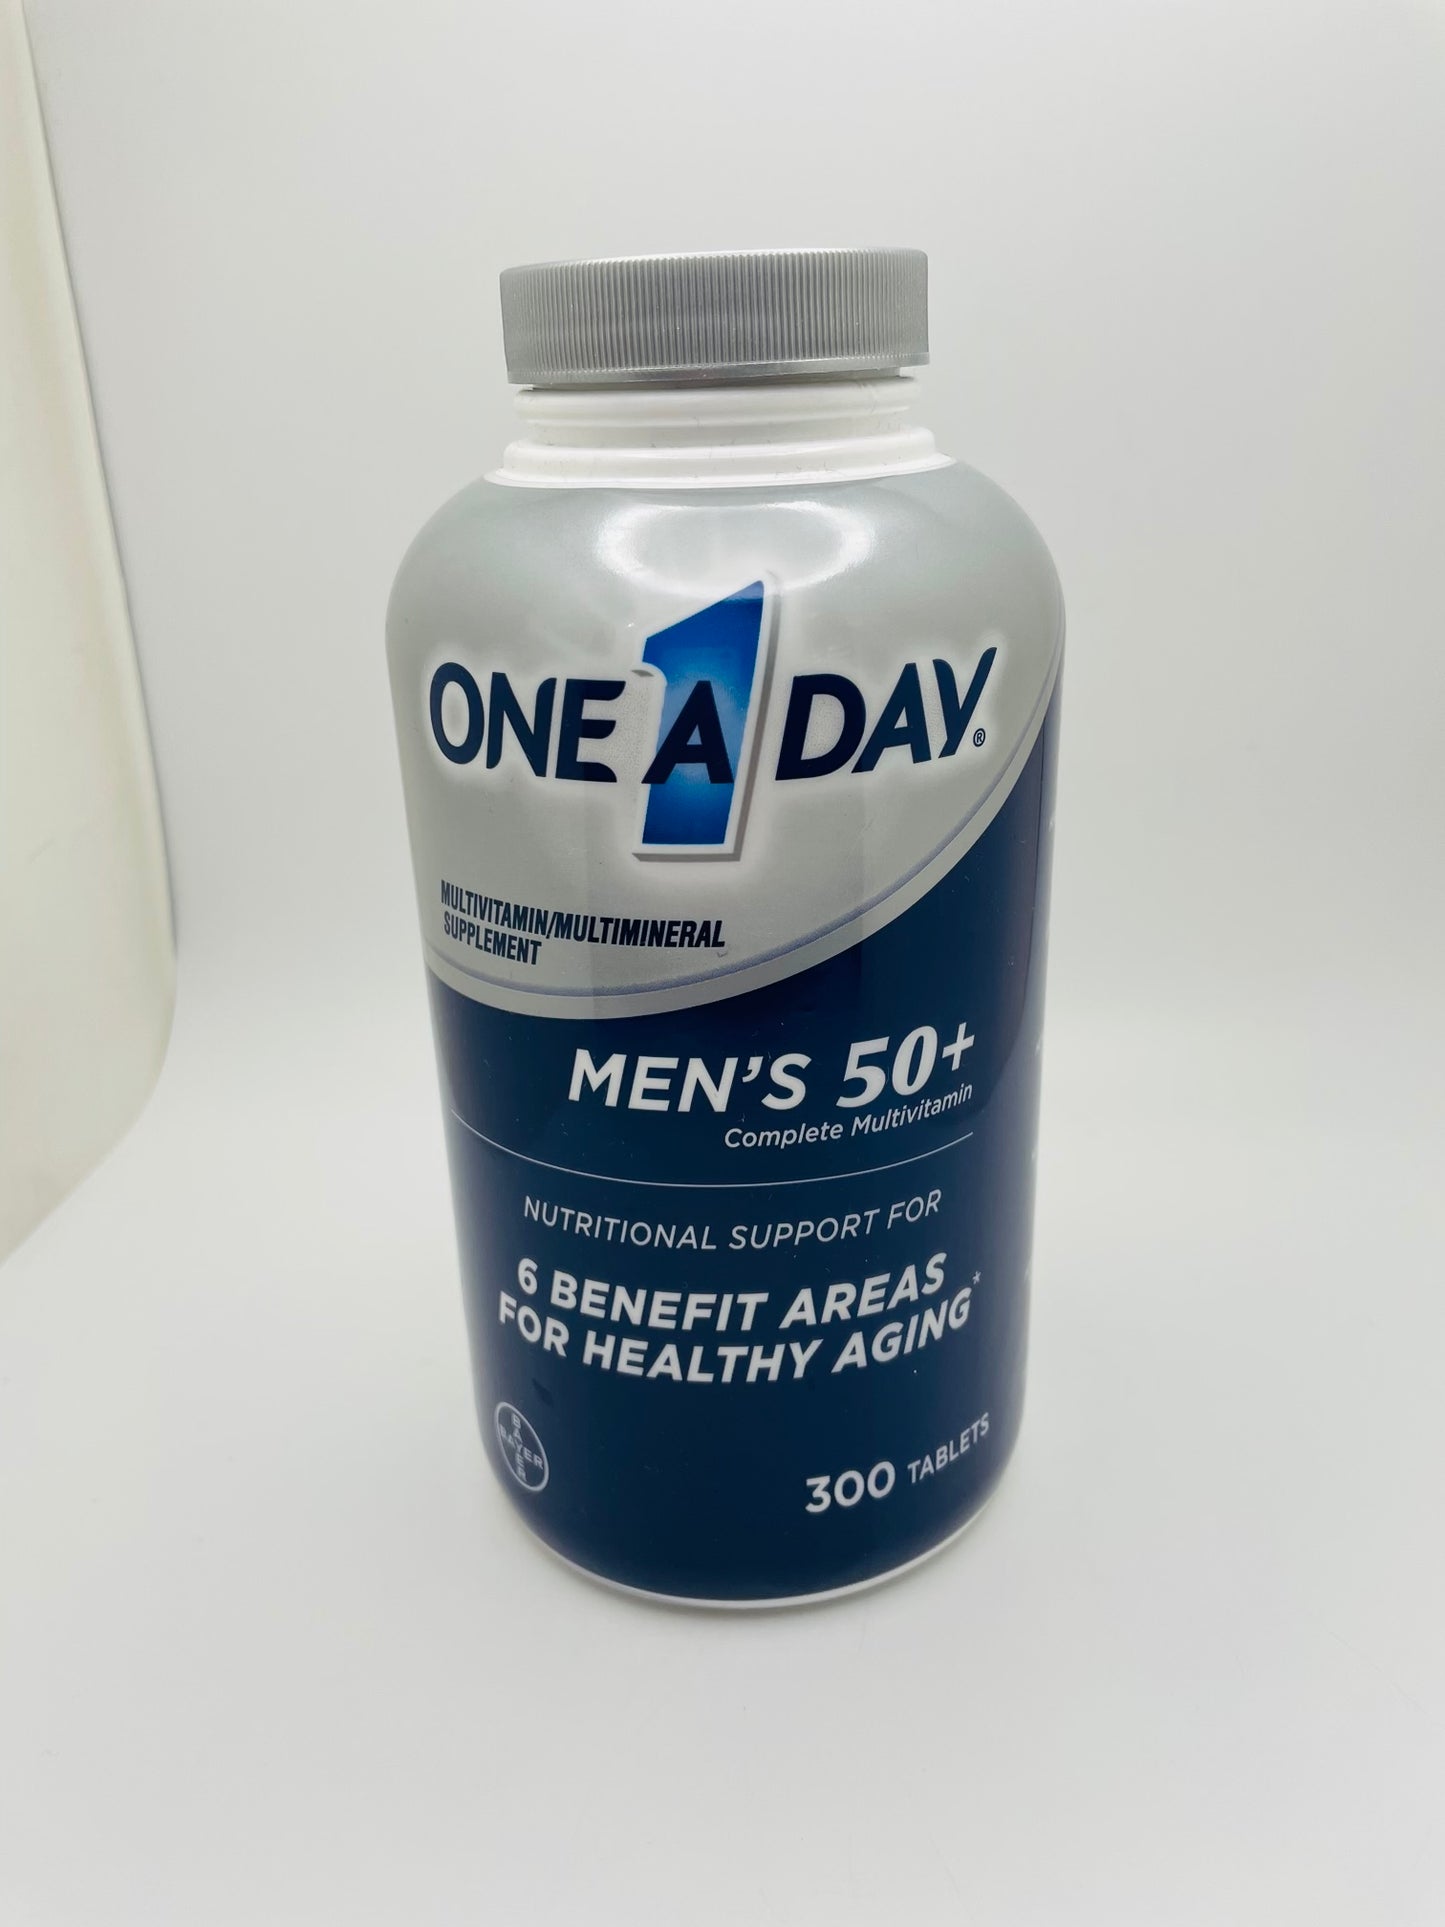 One a day +50 men’s multivitamin